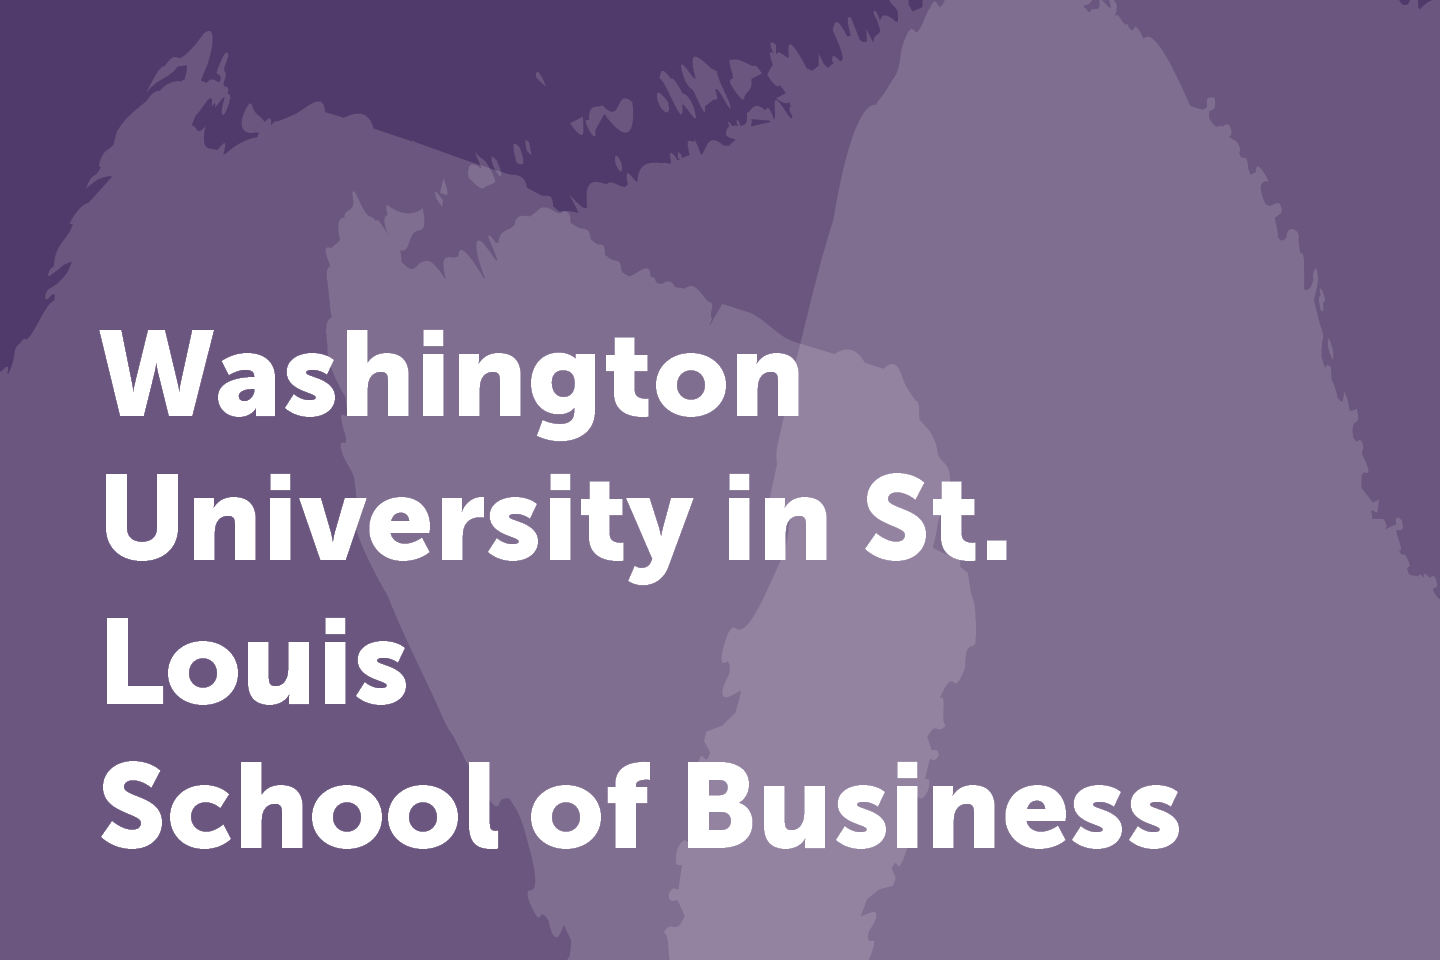 Washington University in St. Louis School of Business